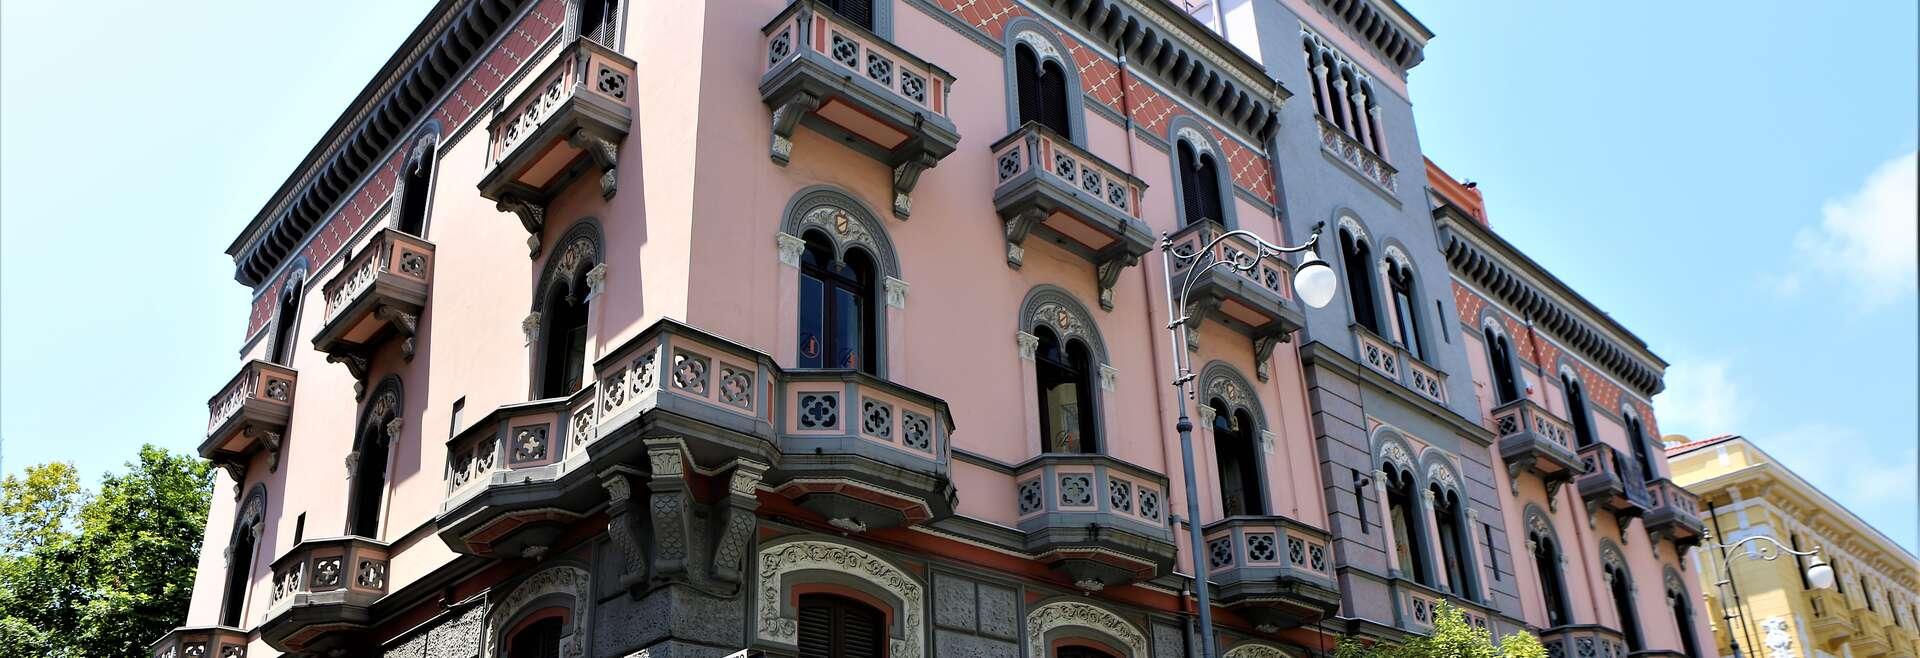 Sprachaufenthalt Italien, Salerno, Accademia Italiana Salerno, Gebäude